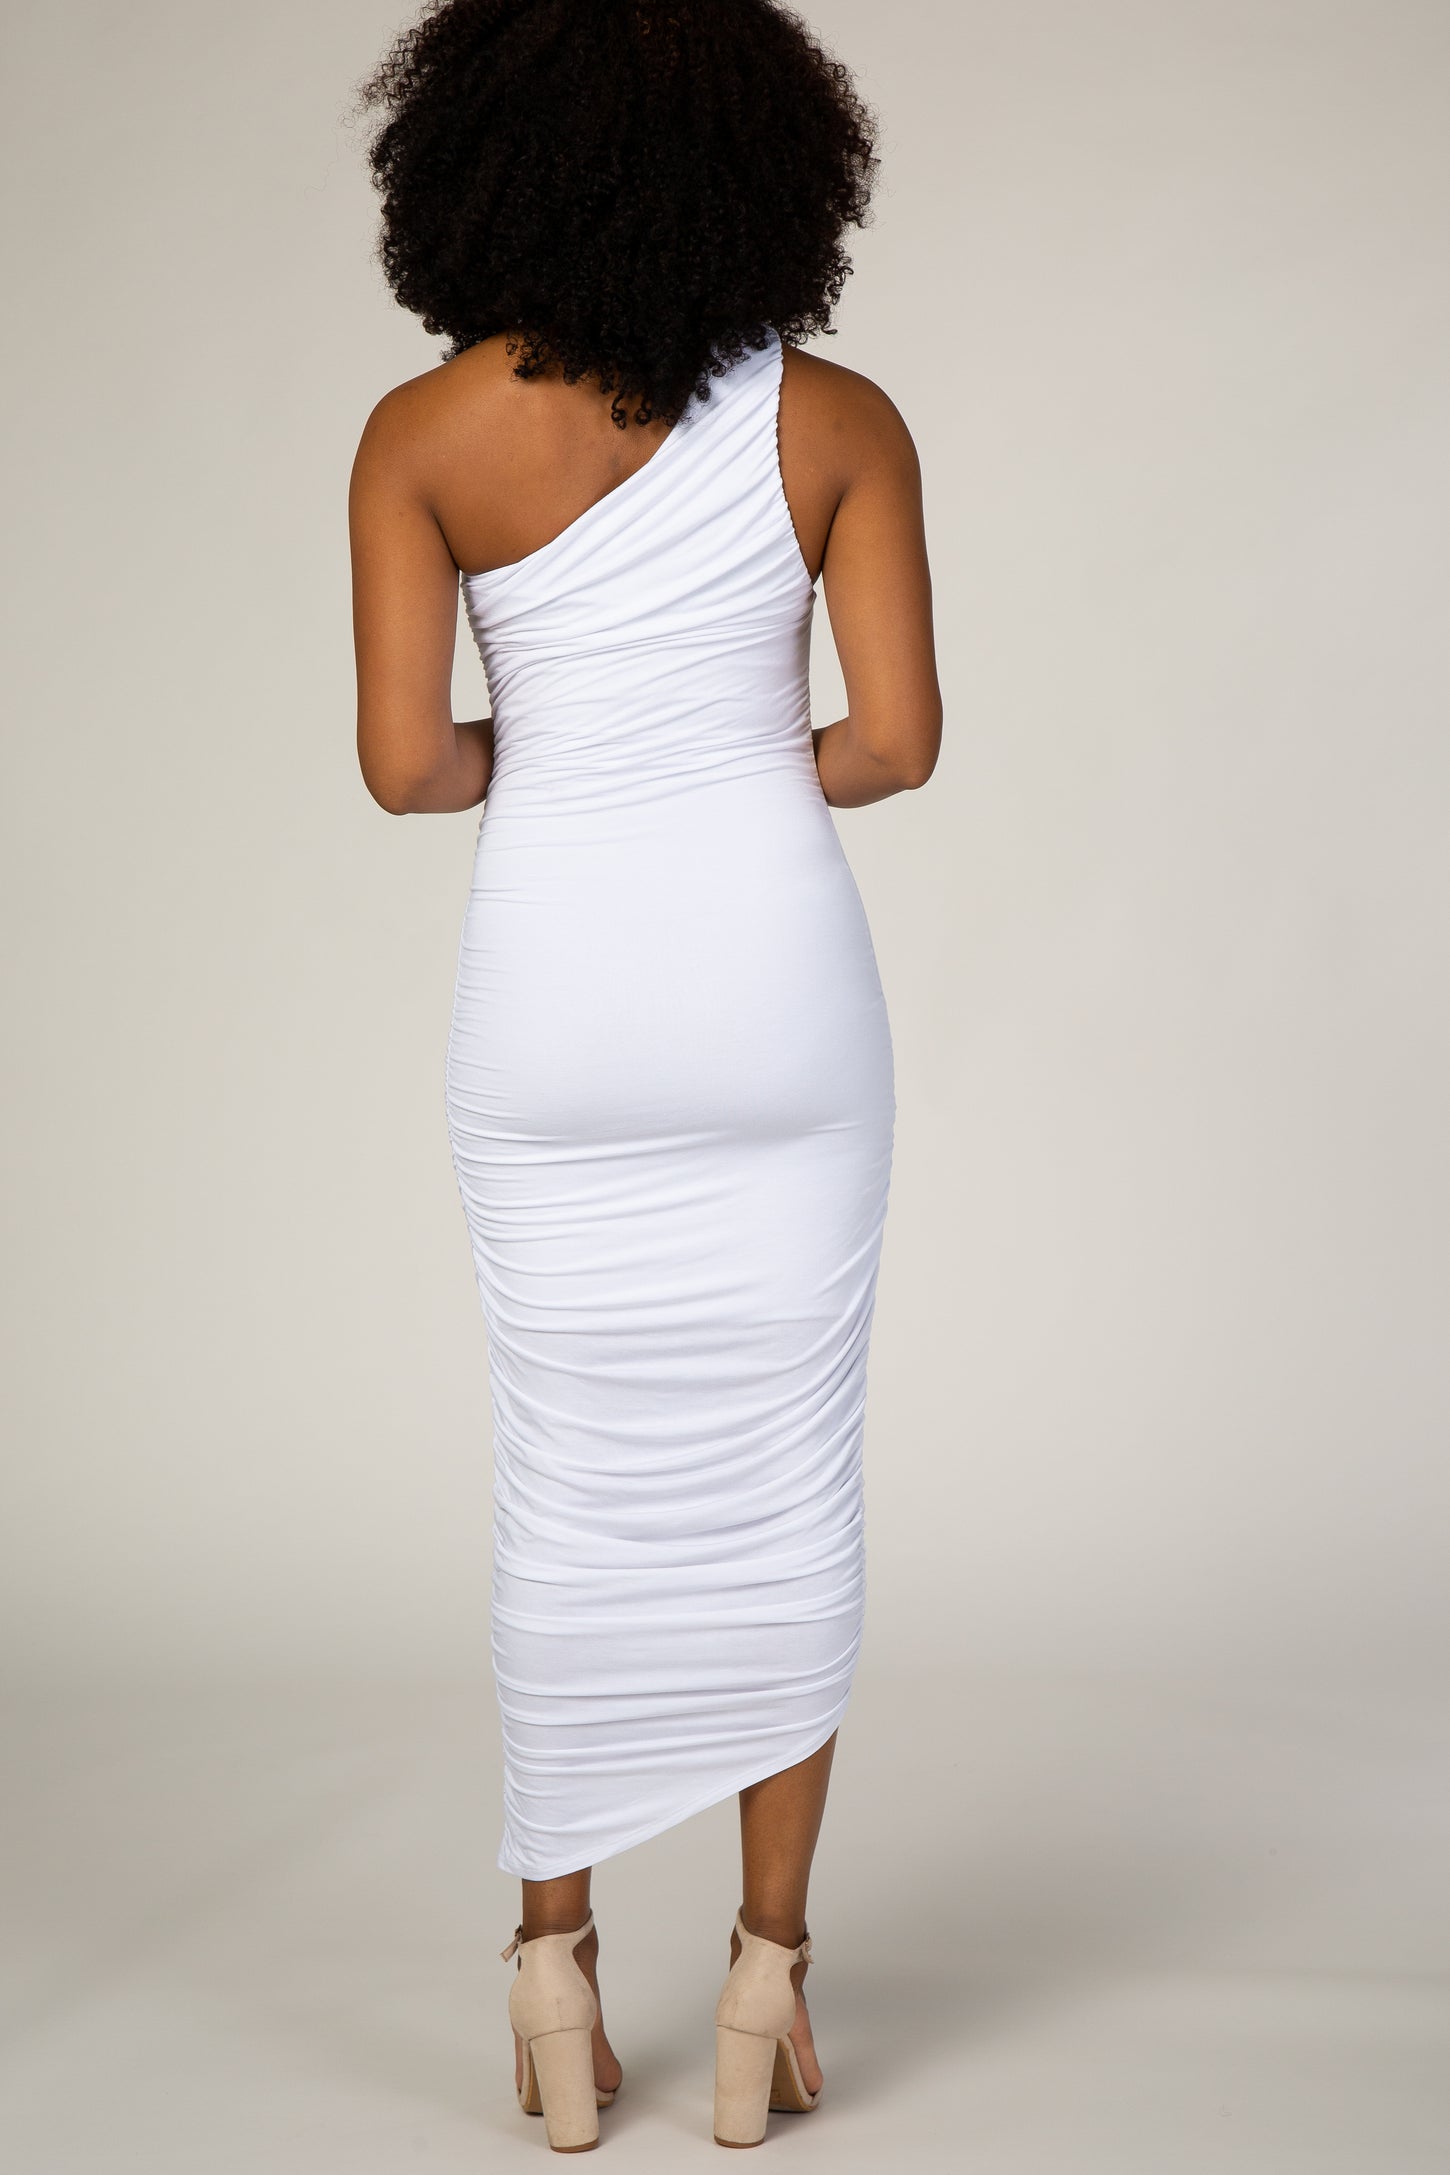 White Ruched One Shoulder Dress